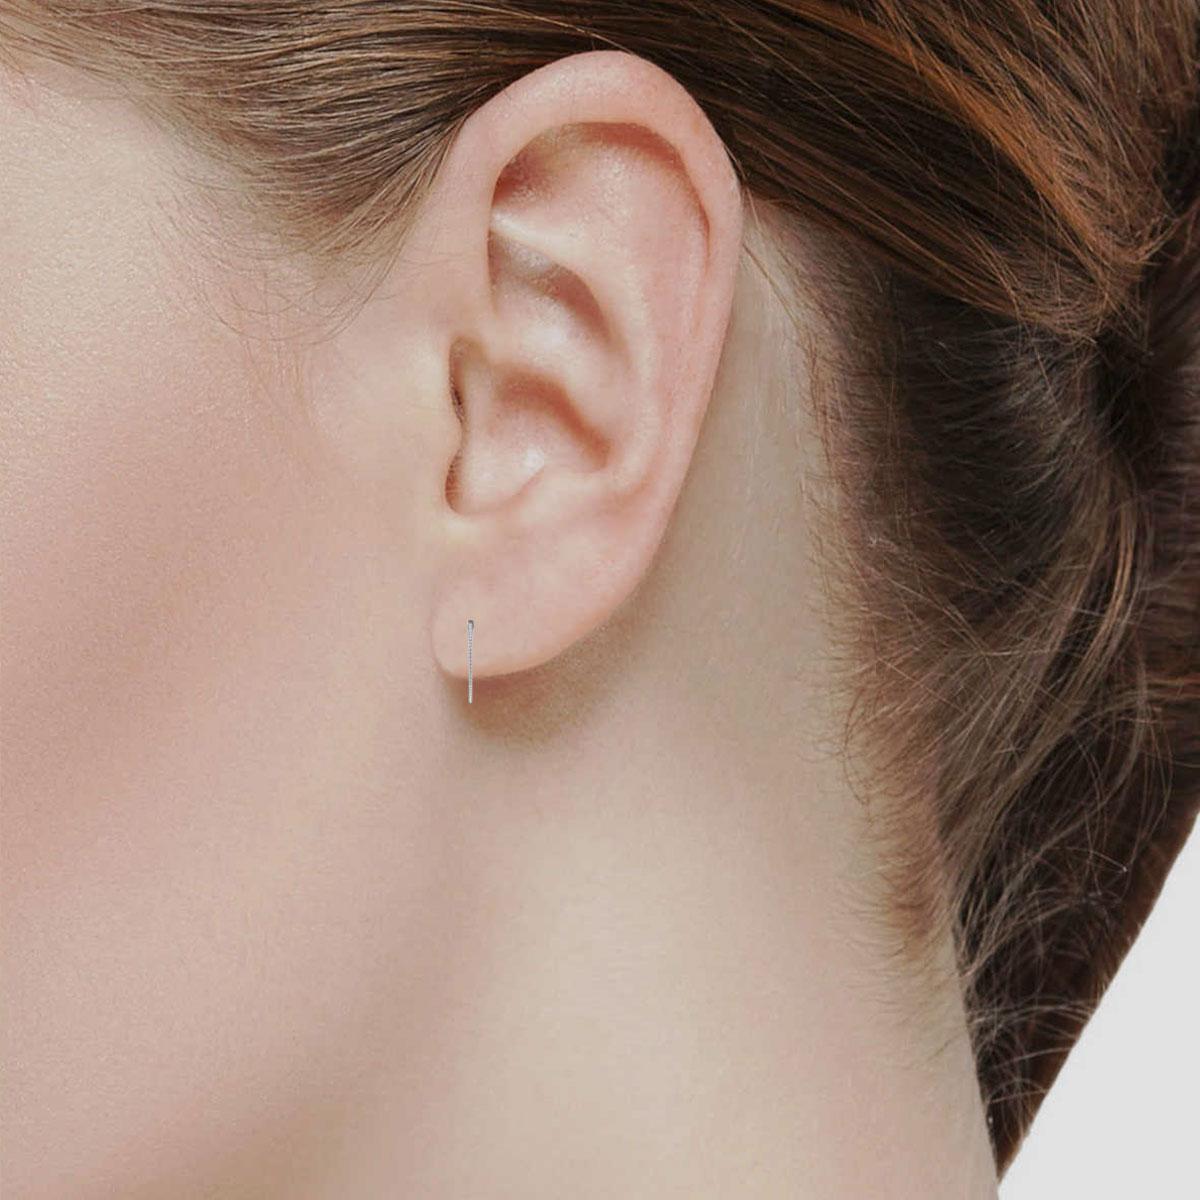 how big is a 1/2 carat diamond earring